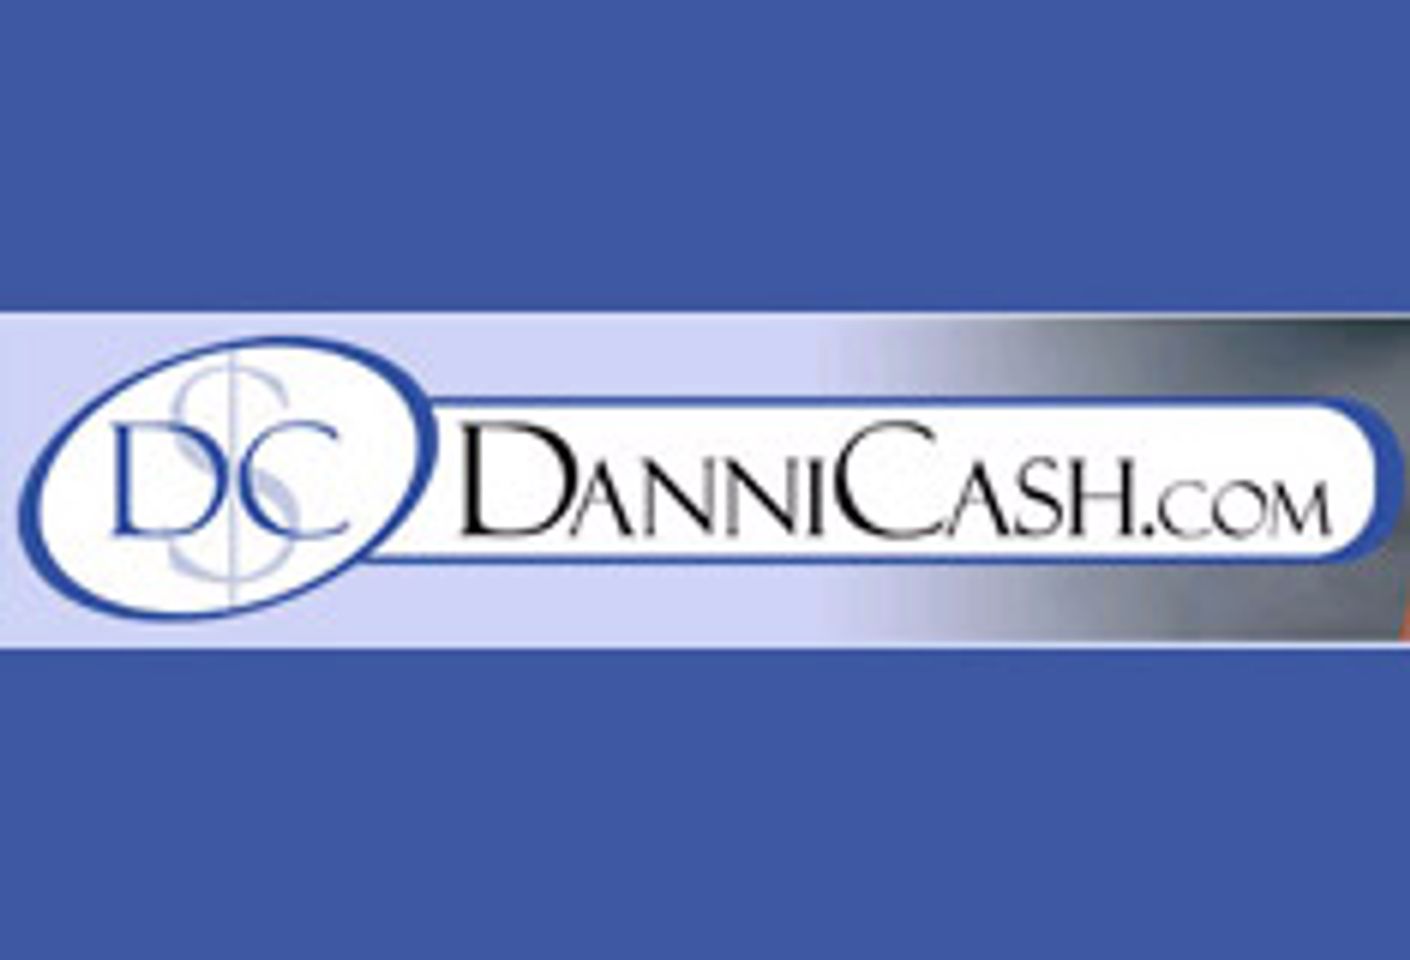 The New DanniCash.com&#8212;It Begins With a New Danni.com Video Tour